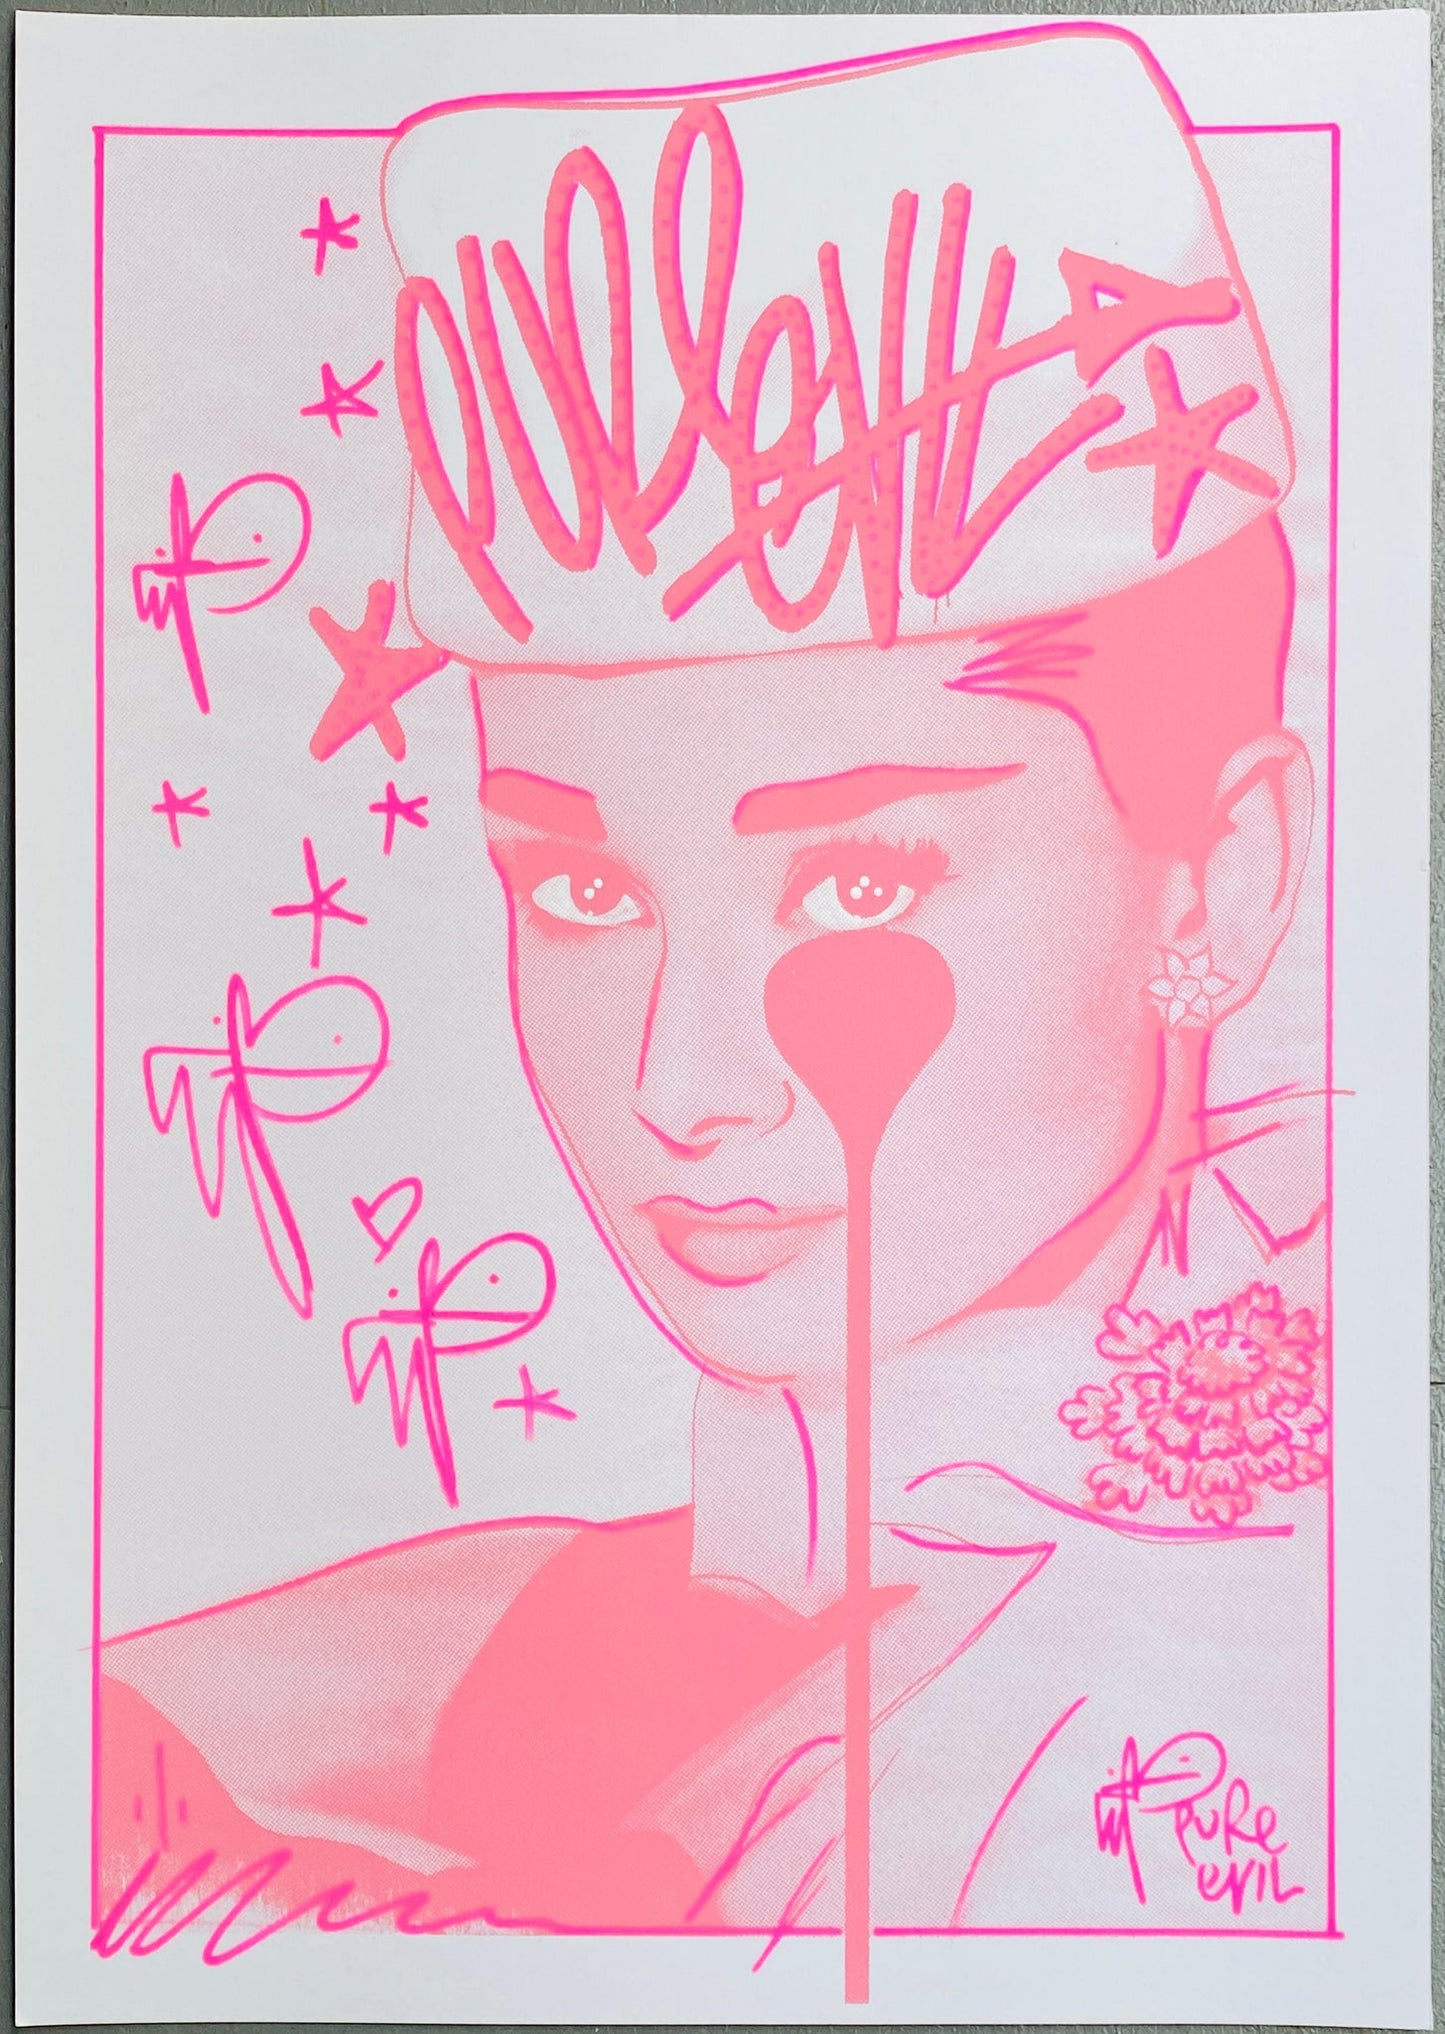 Audrey Hat Print - Flowerecent Pink (Handfinished) - Smolensky Gallery